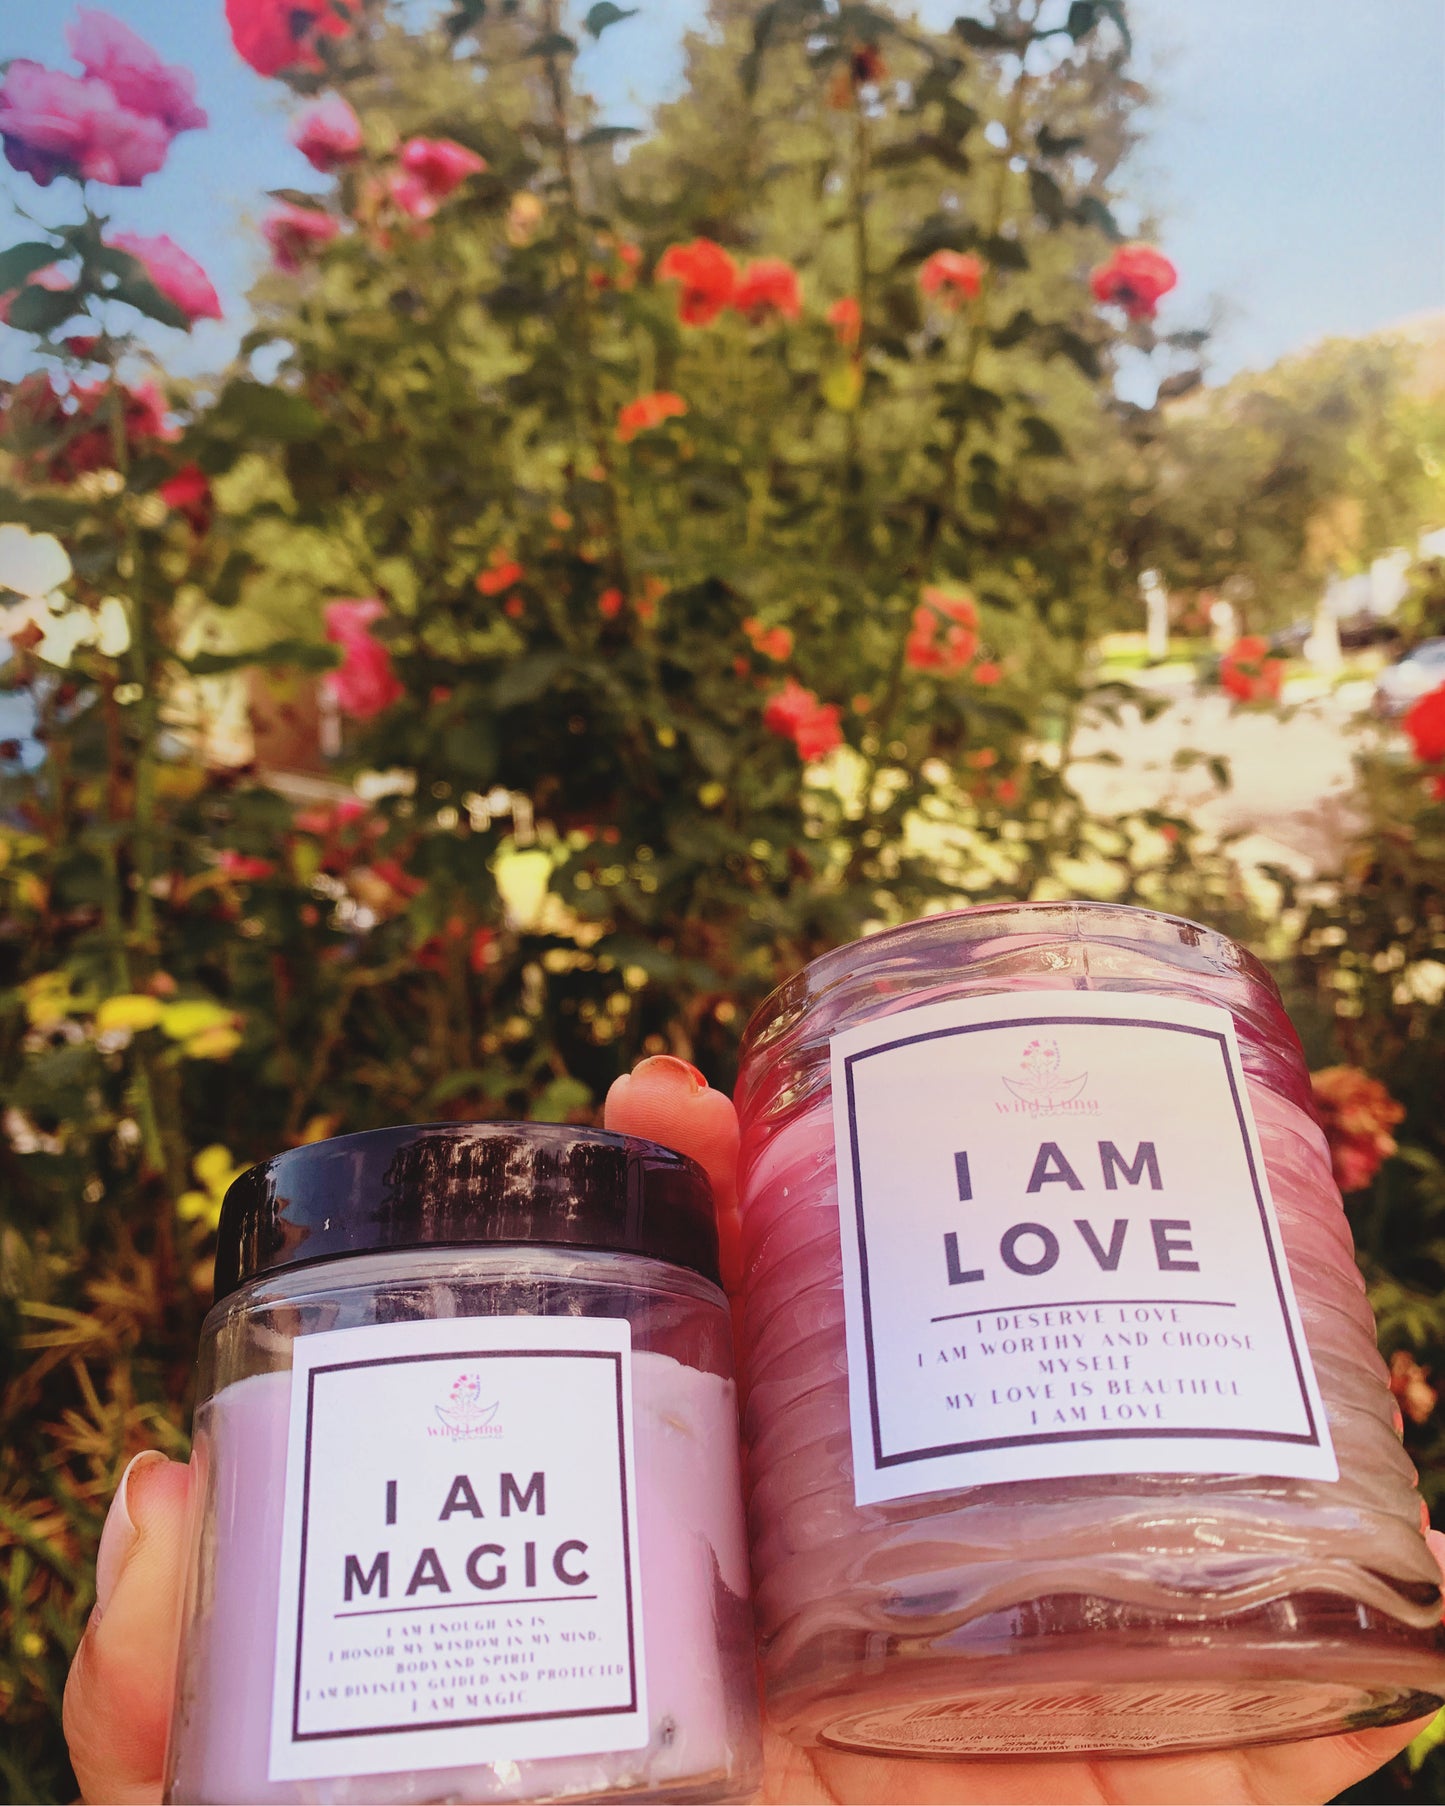 I am Love Affirmation Candle. Wild Luna Botanicals. I am Magic Affirmation Candle